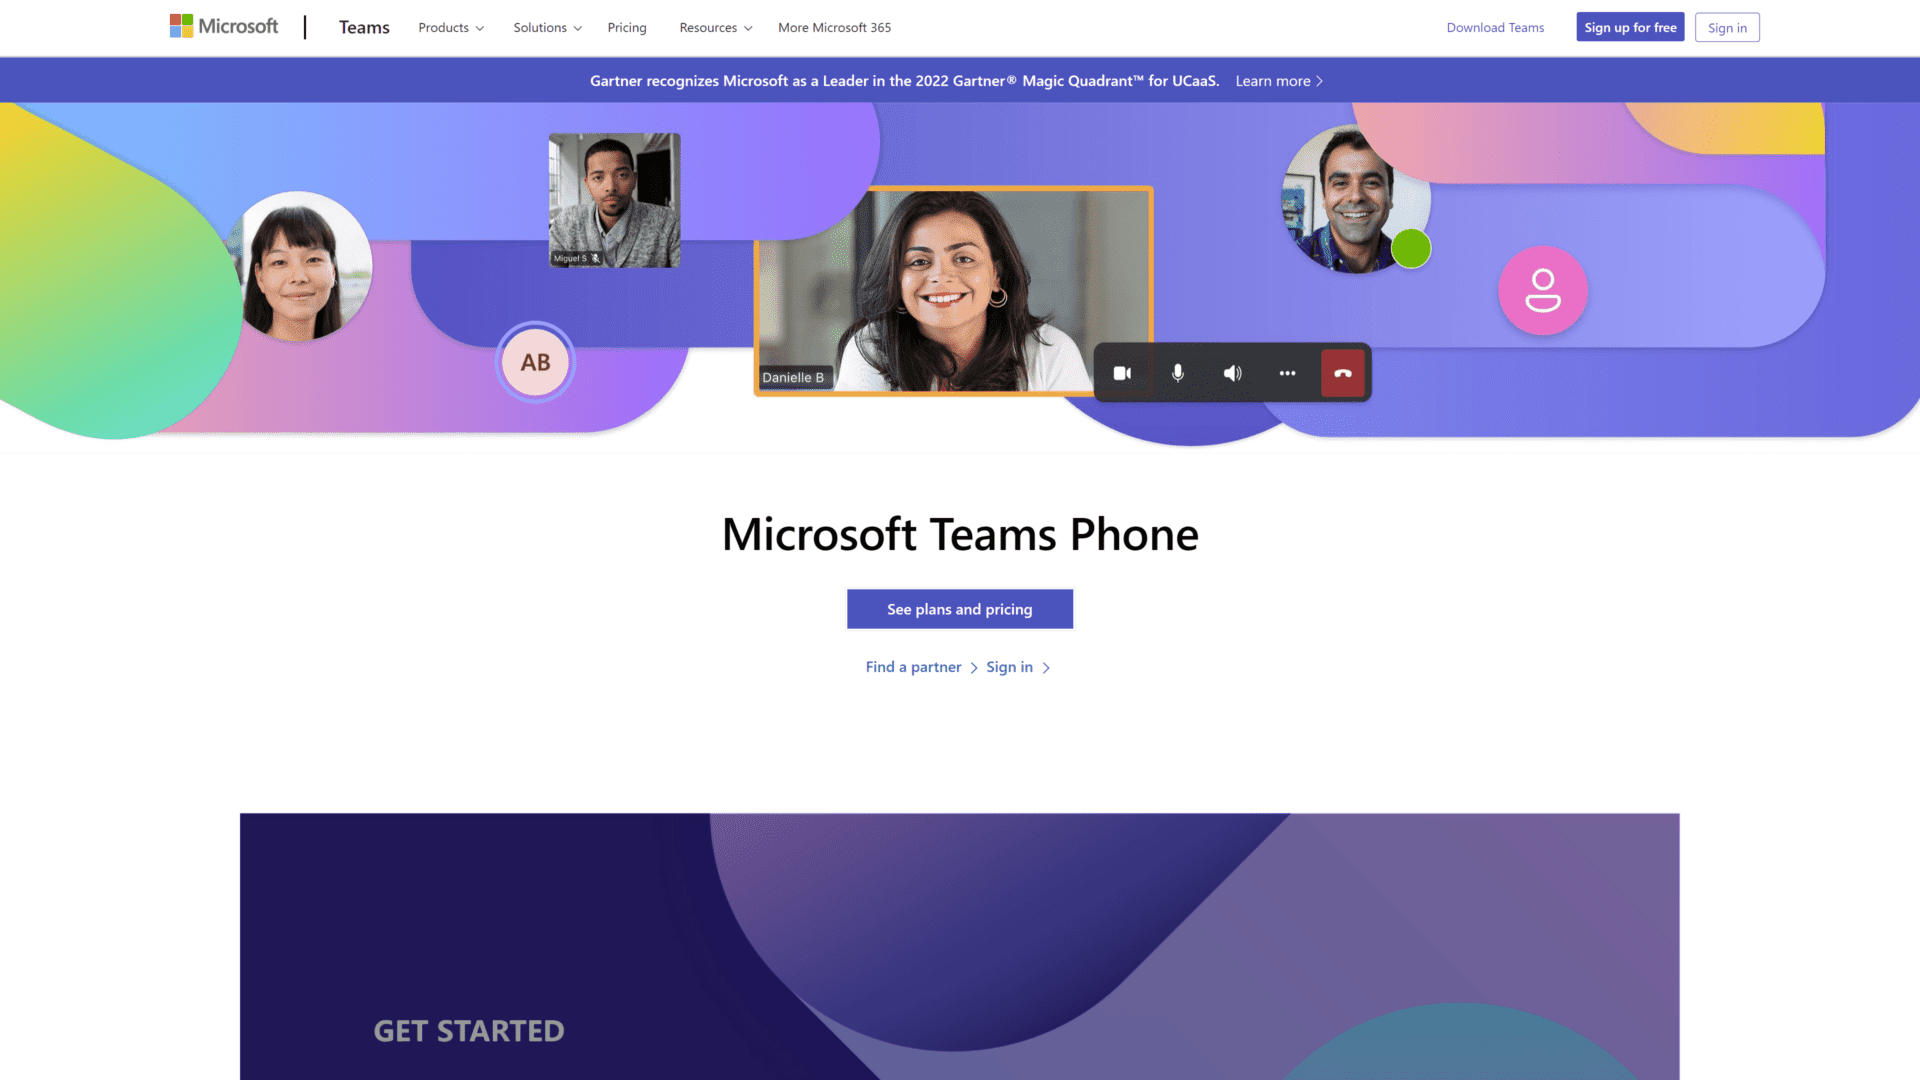 microsoft teams phone homepage screenshot 1